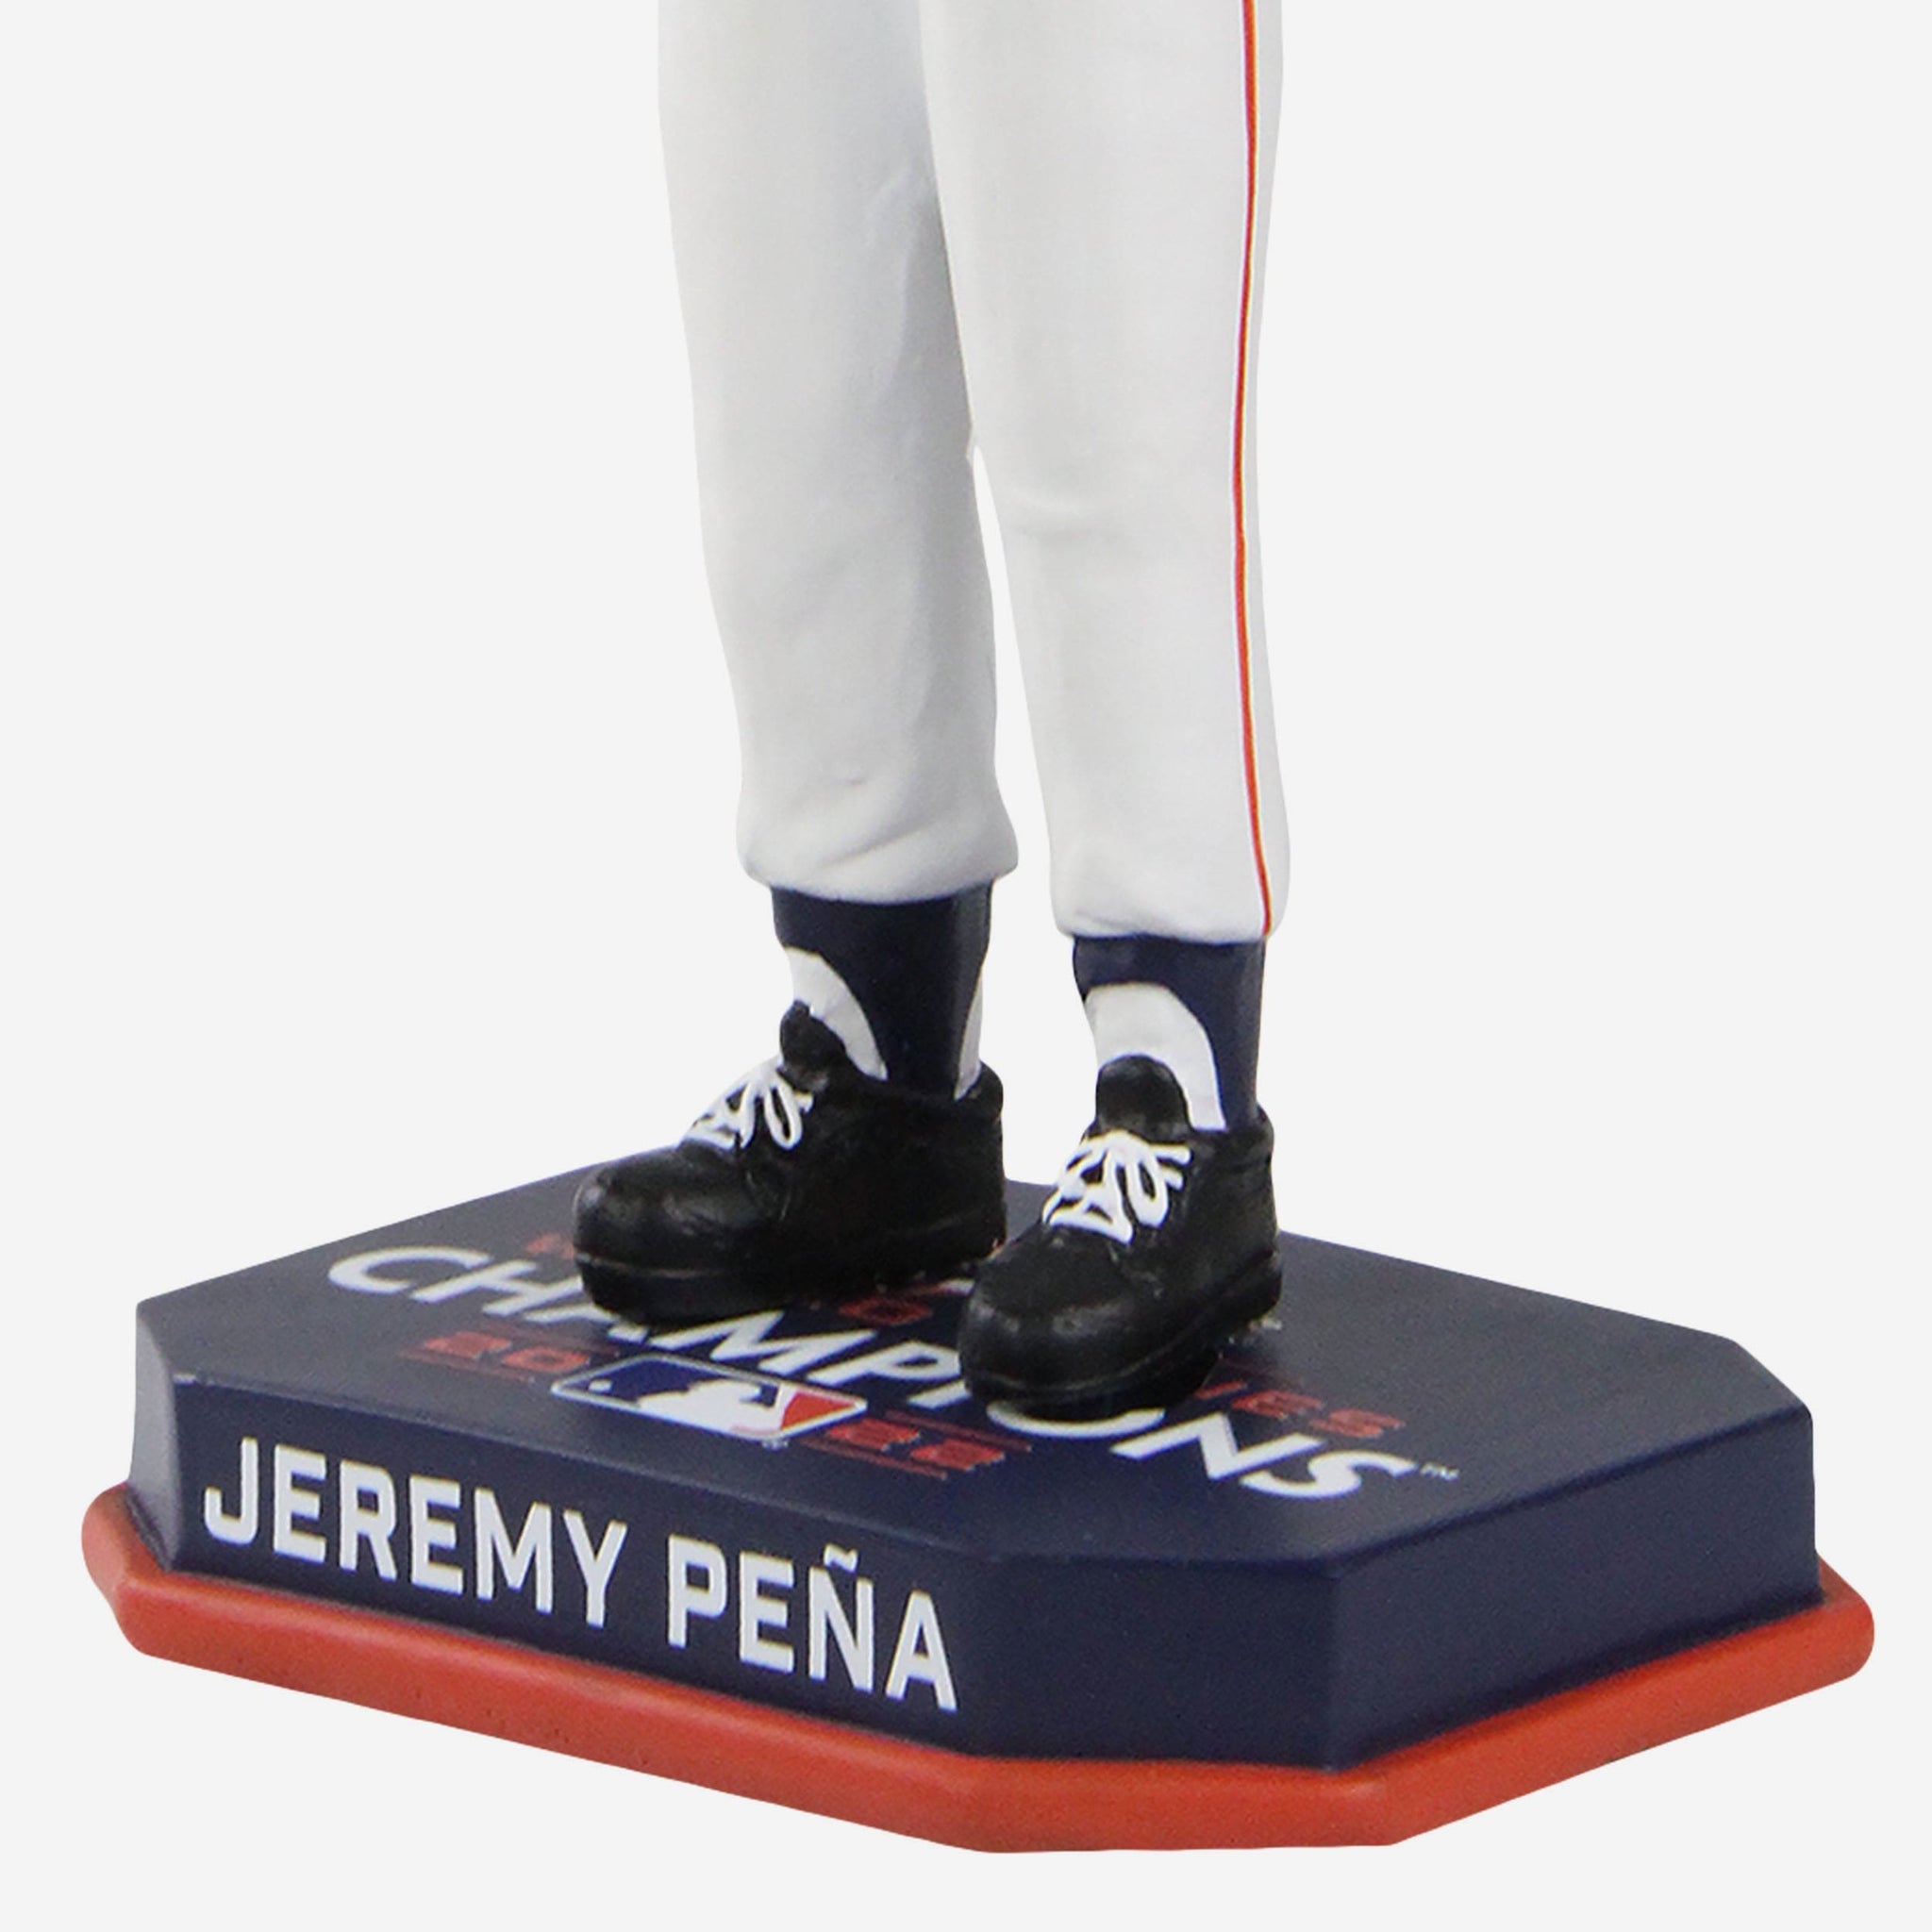 World Series MVP Jeremy Pena hot on sports collectible market